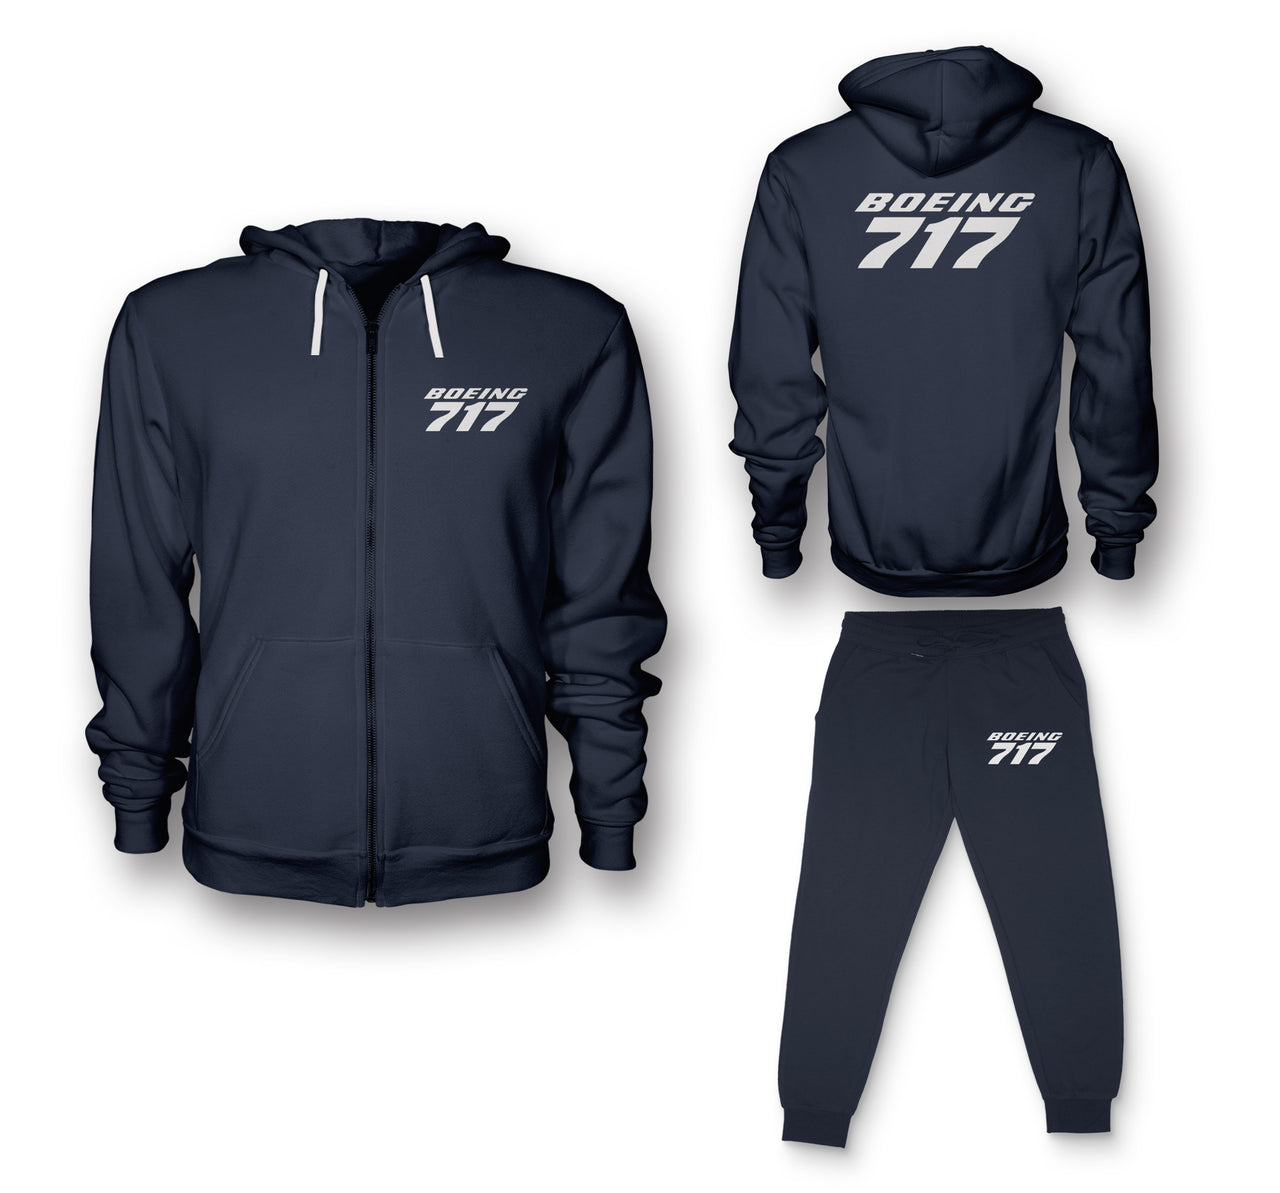 Boeing 717 & Text Designed Zipped Hoodies & Sweatpants Set